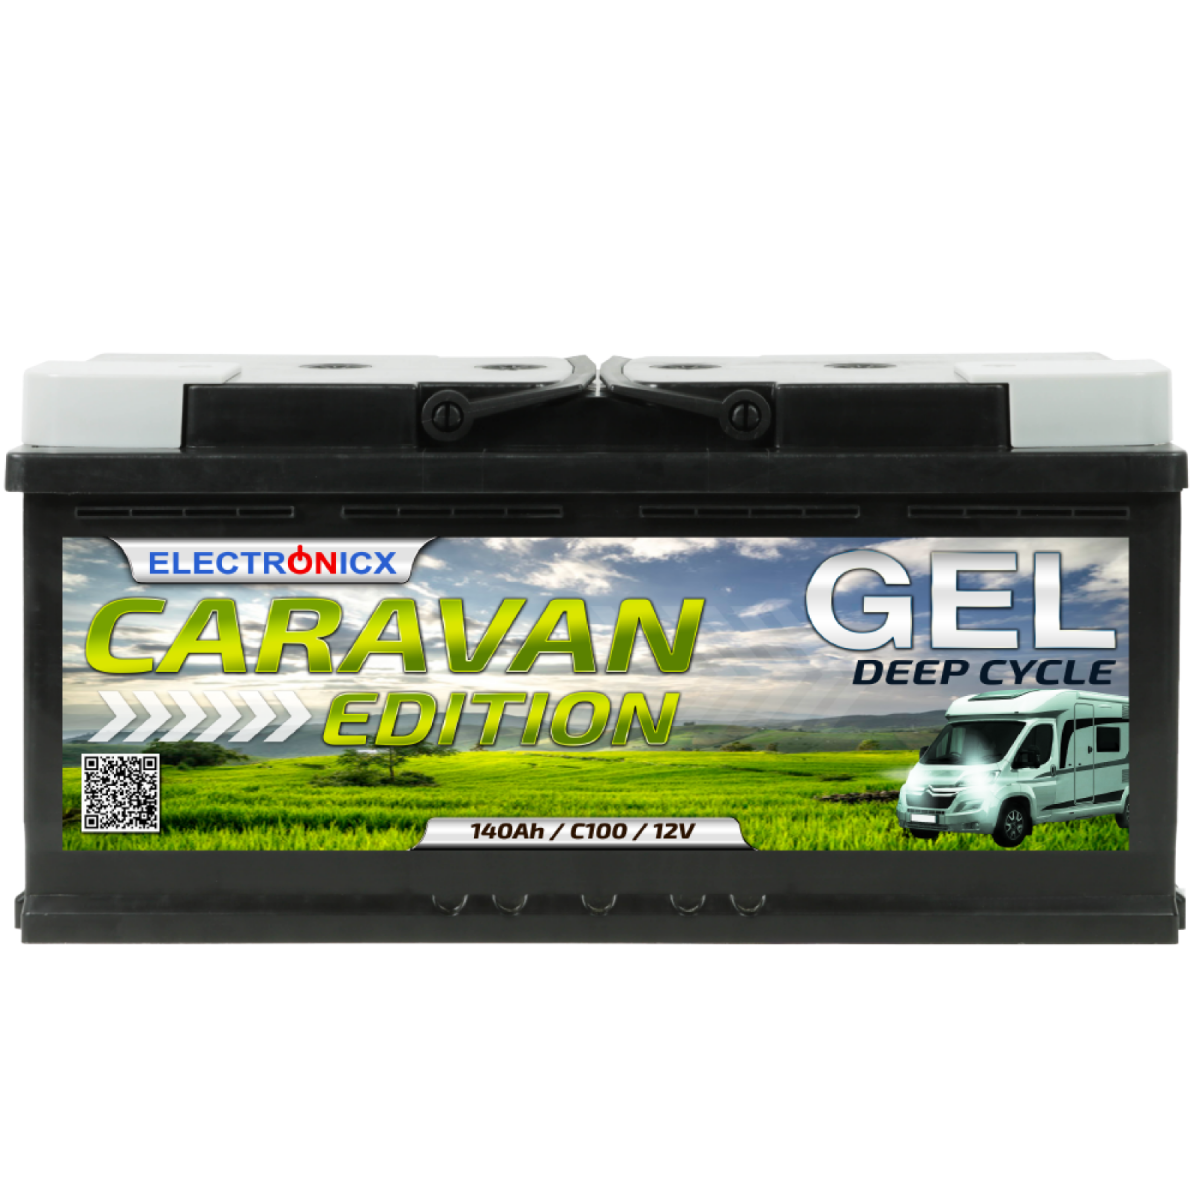 Electronicx Caravan Edition Gel Battery 140 ah 12v Motorhome Boat Supply